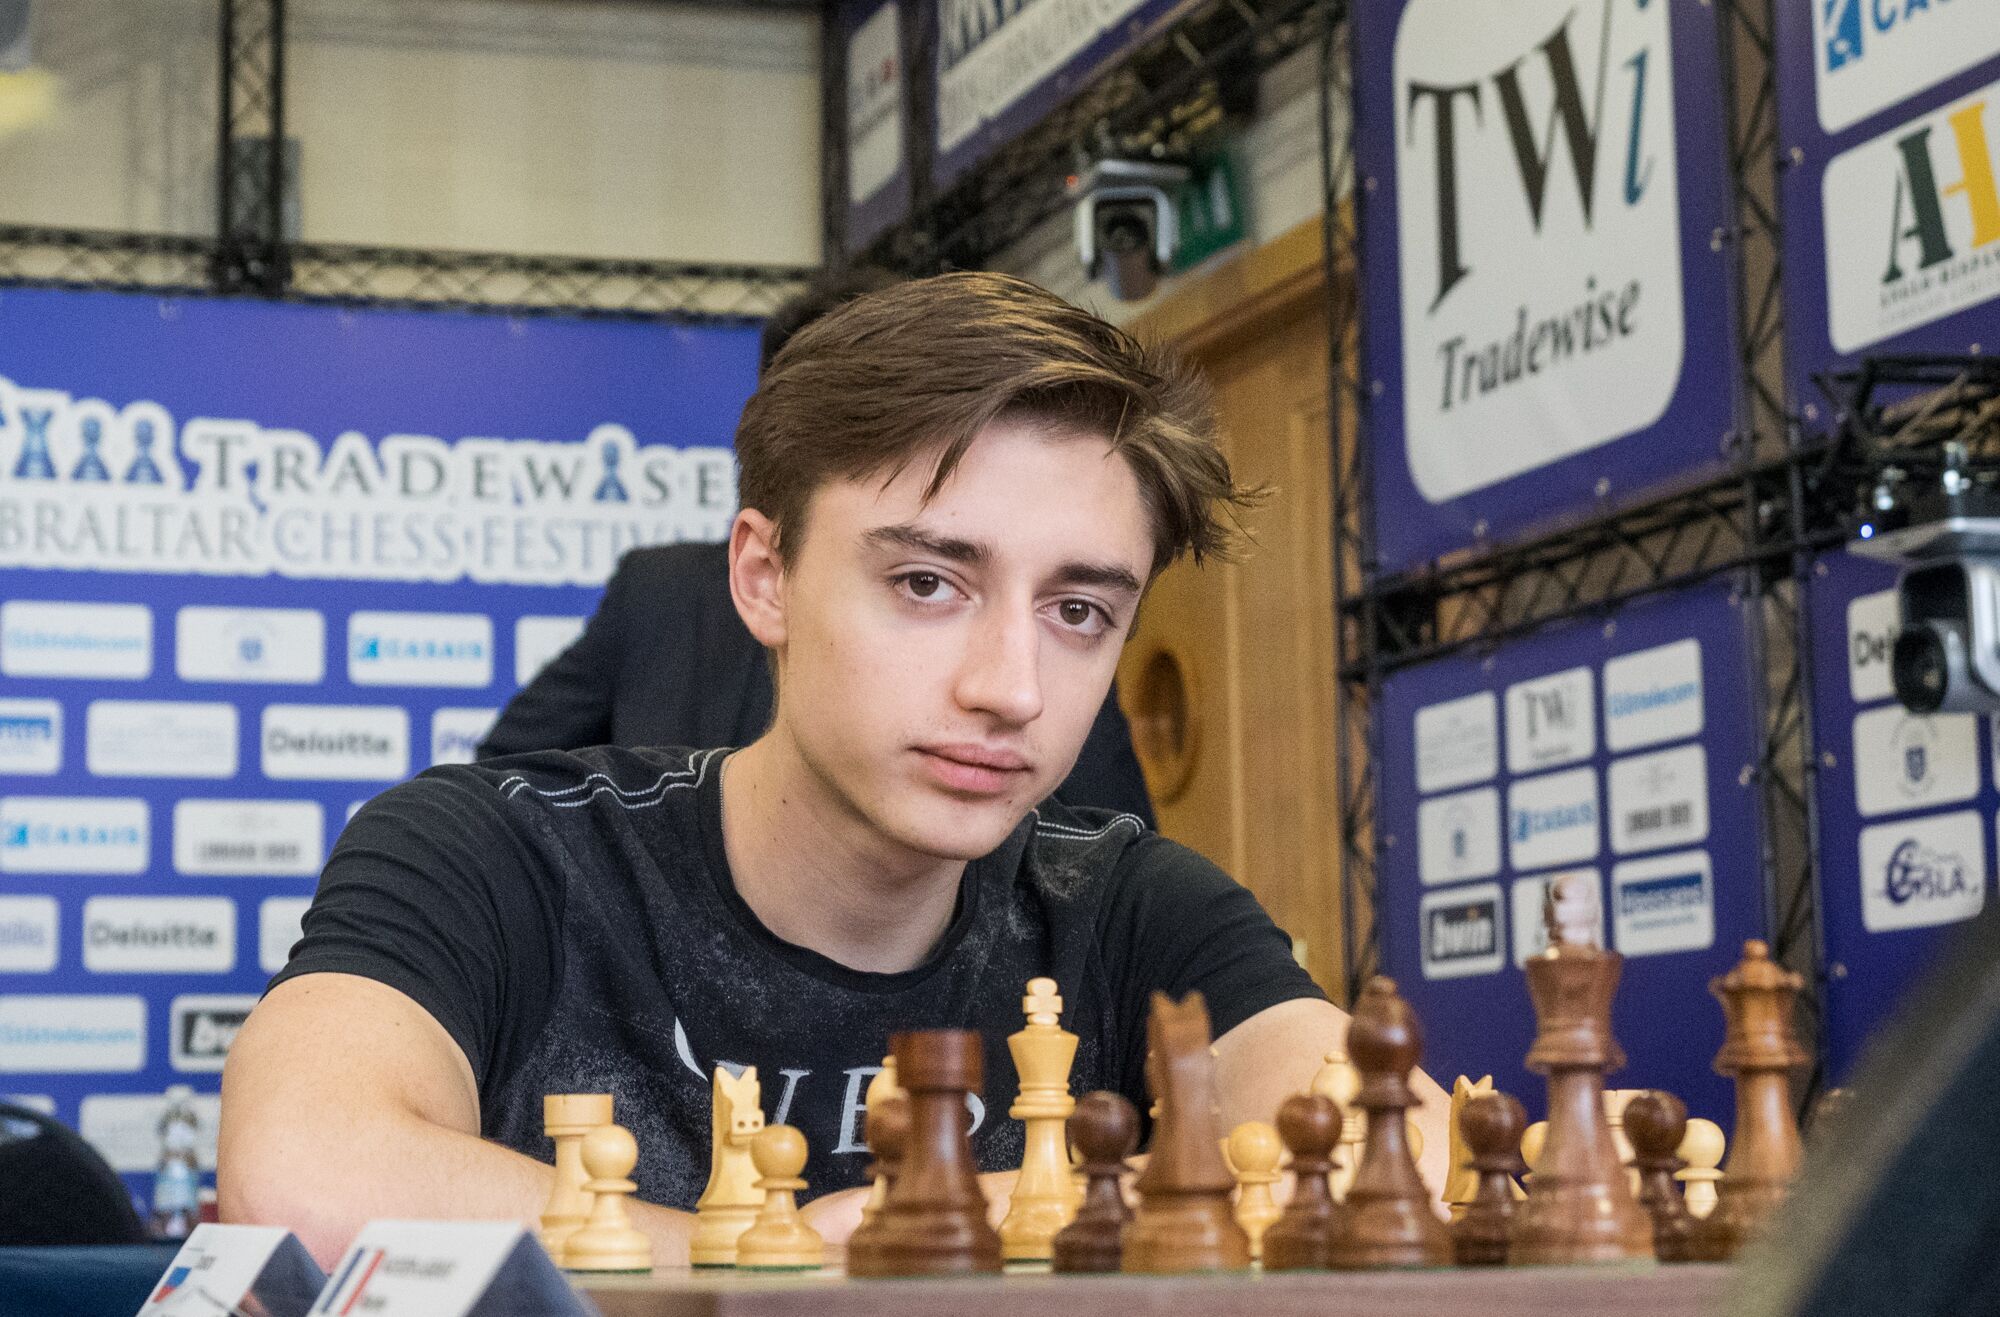 International Chess Federation on X: Daniil Dubov leads #SteinitzMemorial  after Day 2: 1️⃣ Dubov - 8 out of 12 2️⃣ Carlsen - 7½ 3️⃣ Mamedyarov - 7  4-5. Le Quang Liem, Svidler 